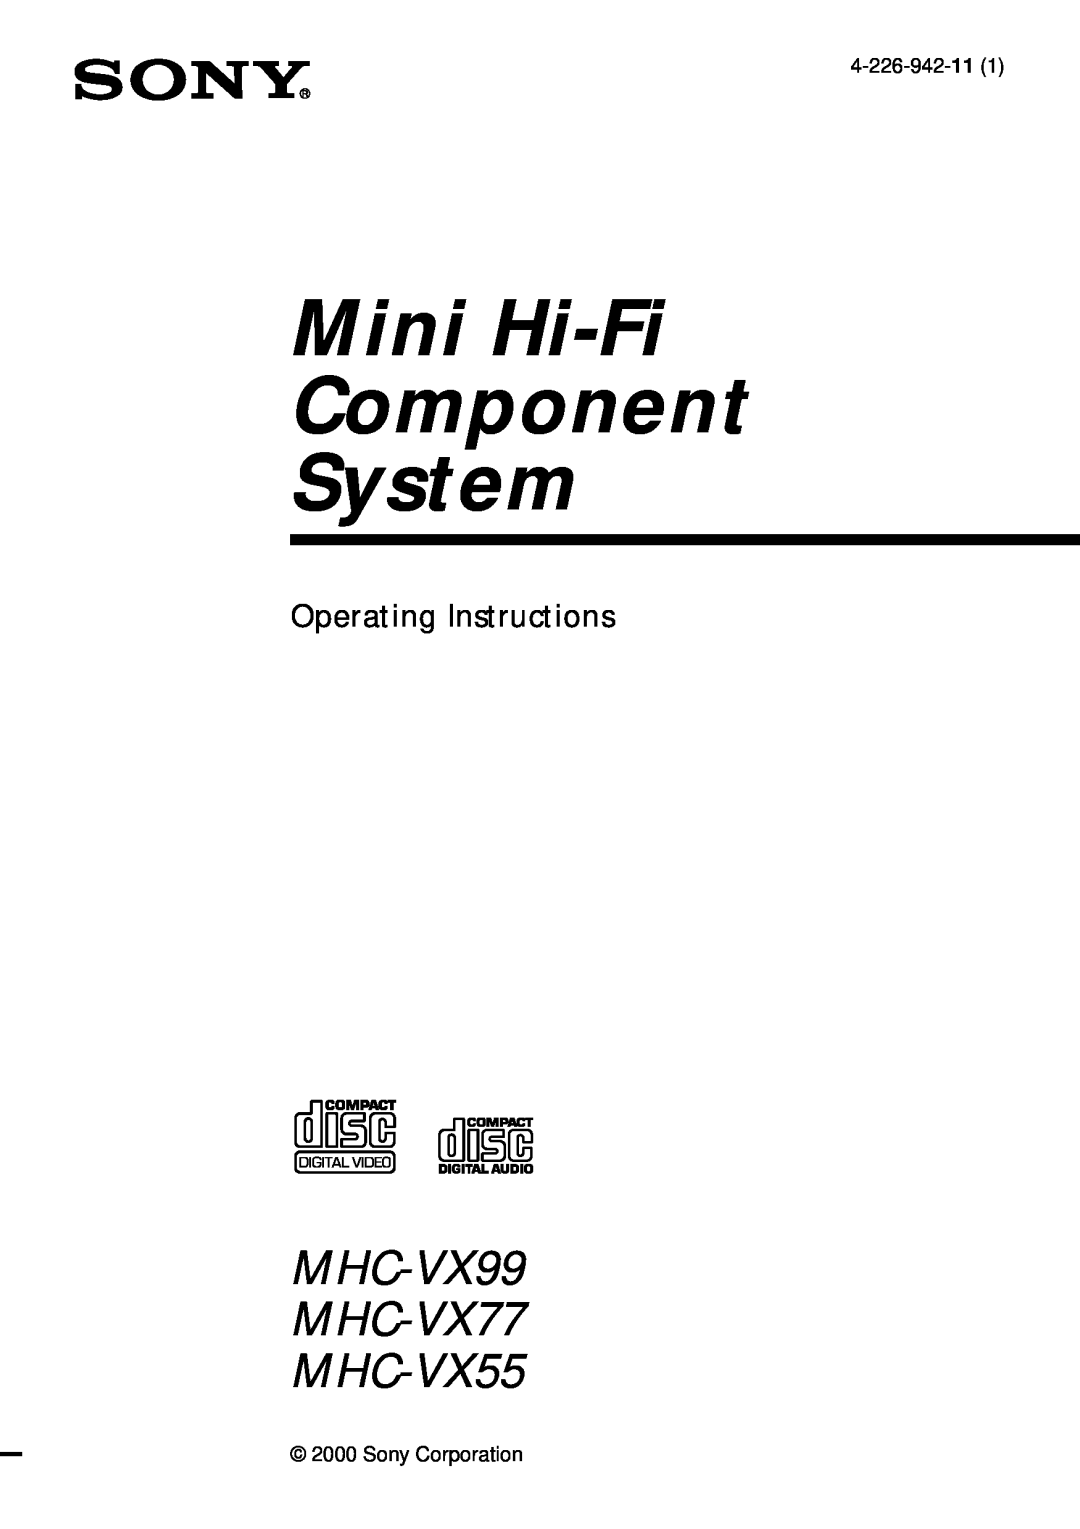 Sony operating instructions Mini Hi-Fi Component System, MHC-VX99 MHC-VX77 MHC-VX55, Operating Instructions 